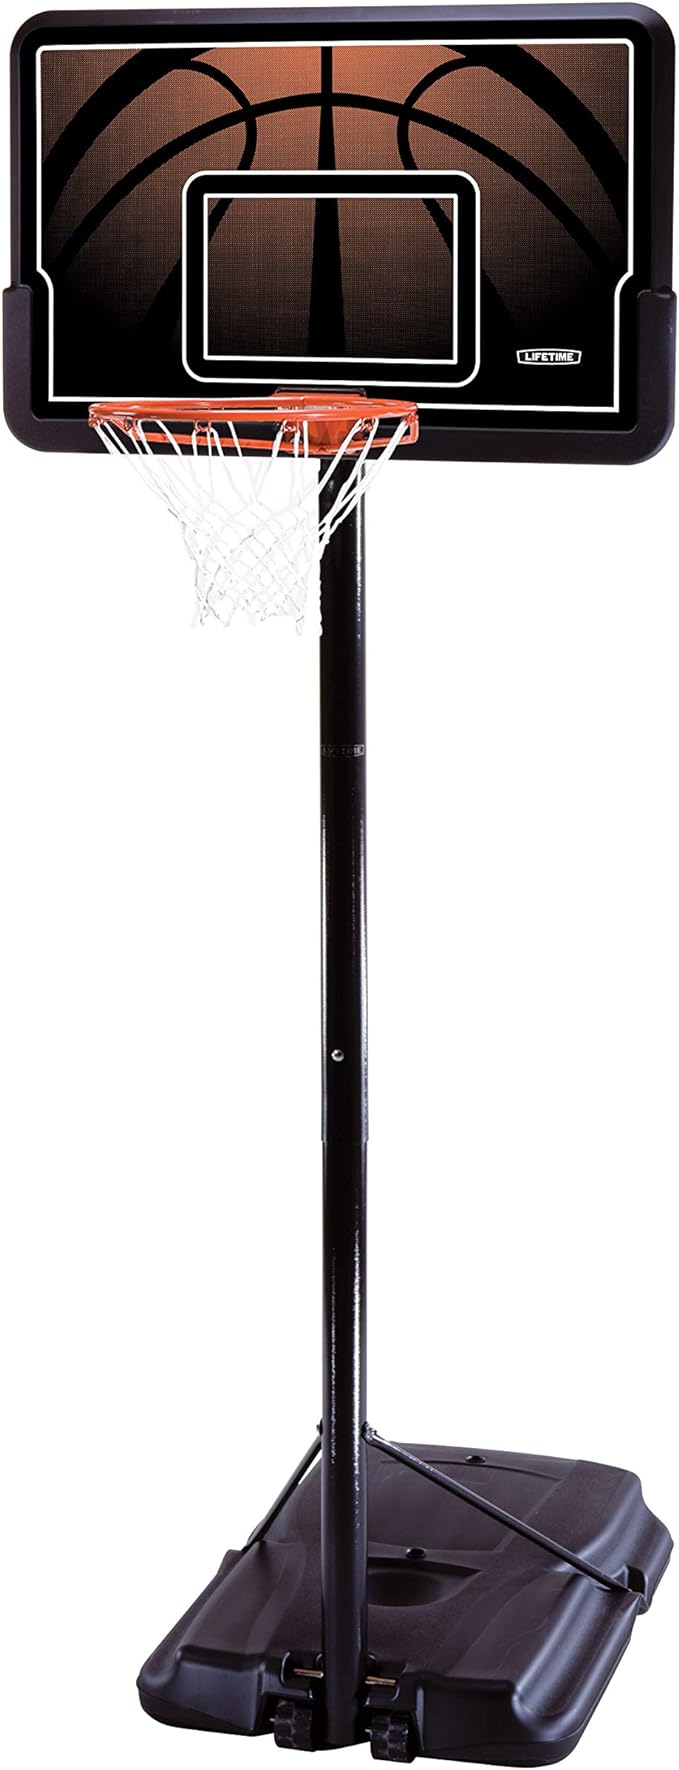 lifetime height adjustable portable basketball system 44 inch backboard  ?lifetime b003twvil6